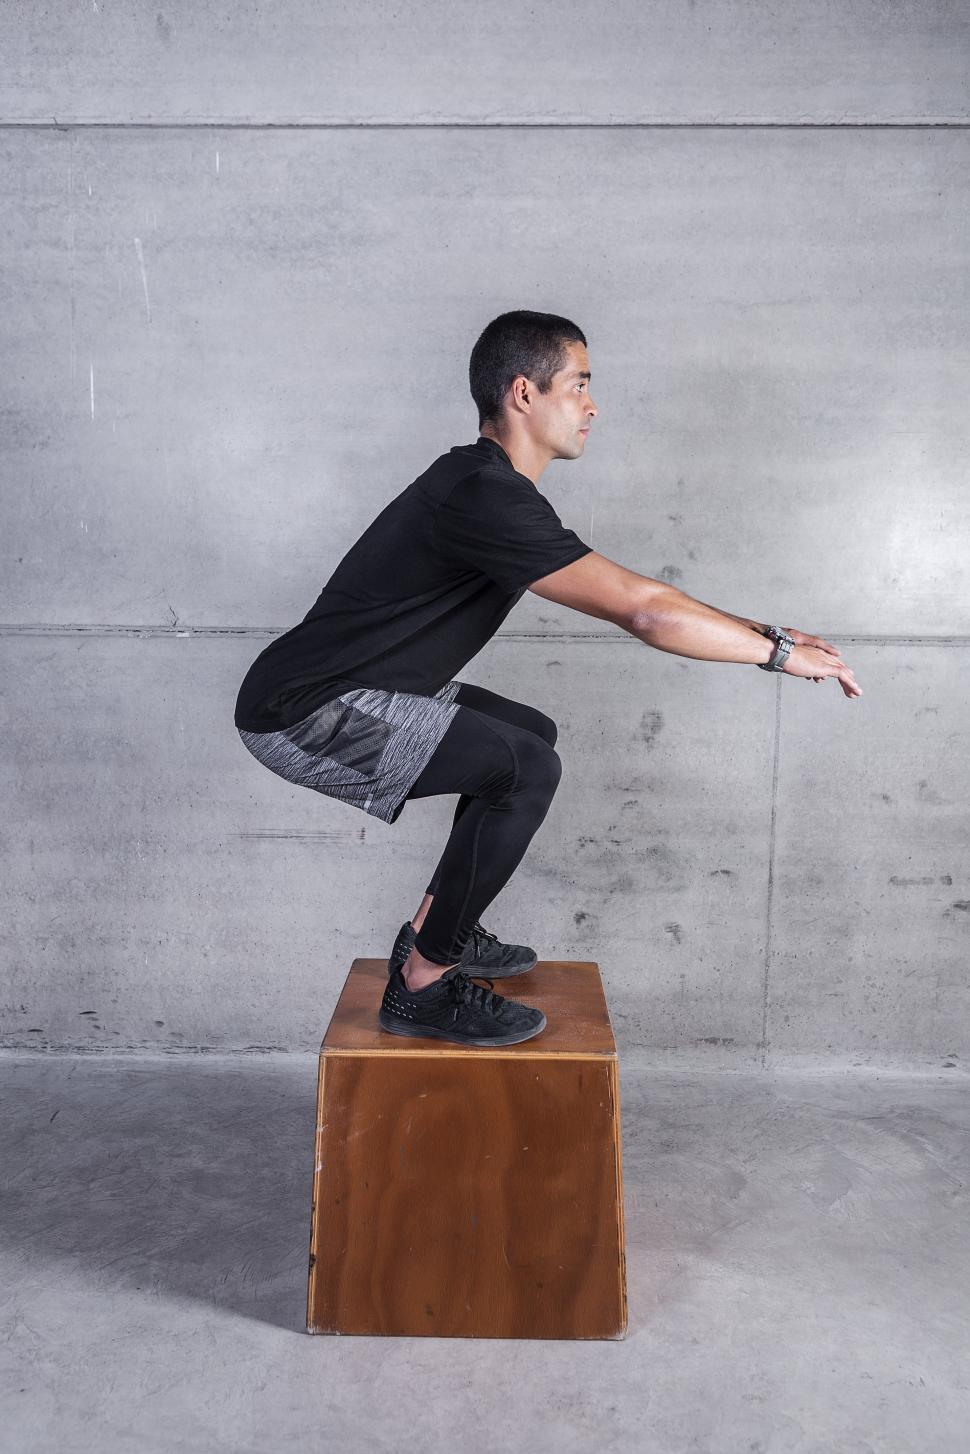 Free Image of Man squatting on wooden block 